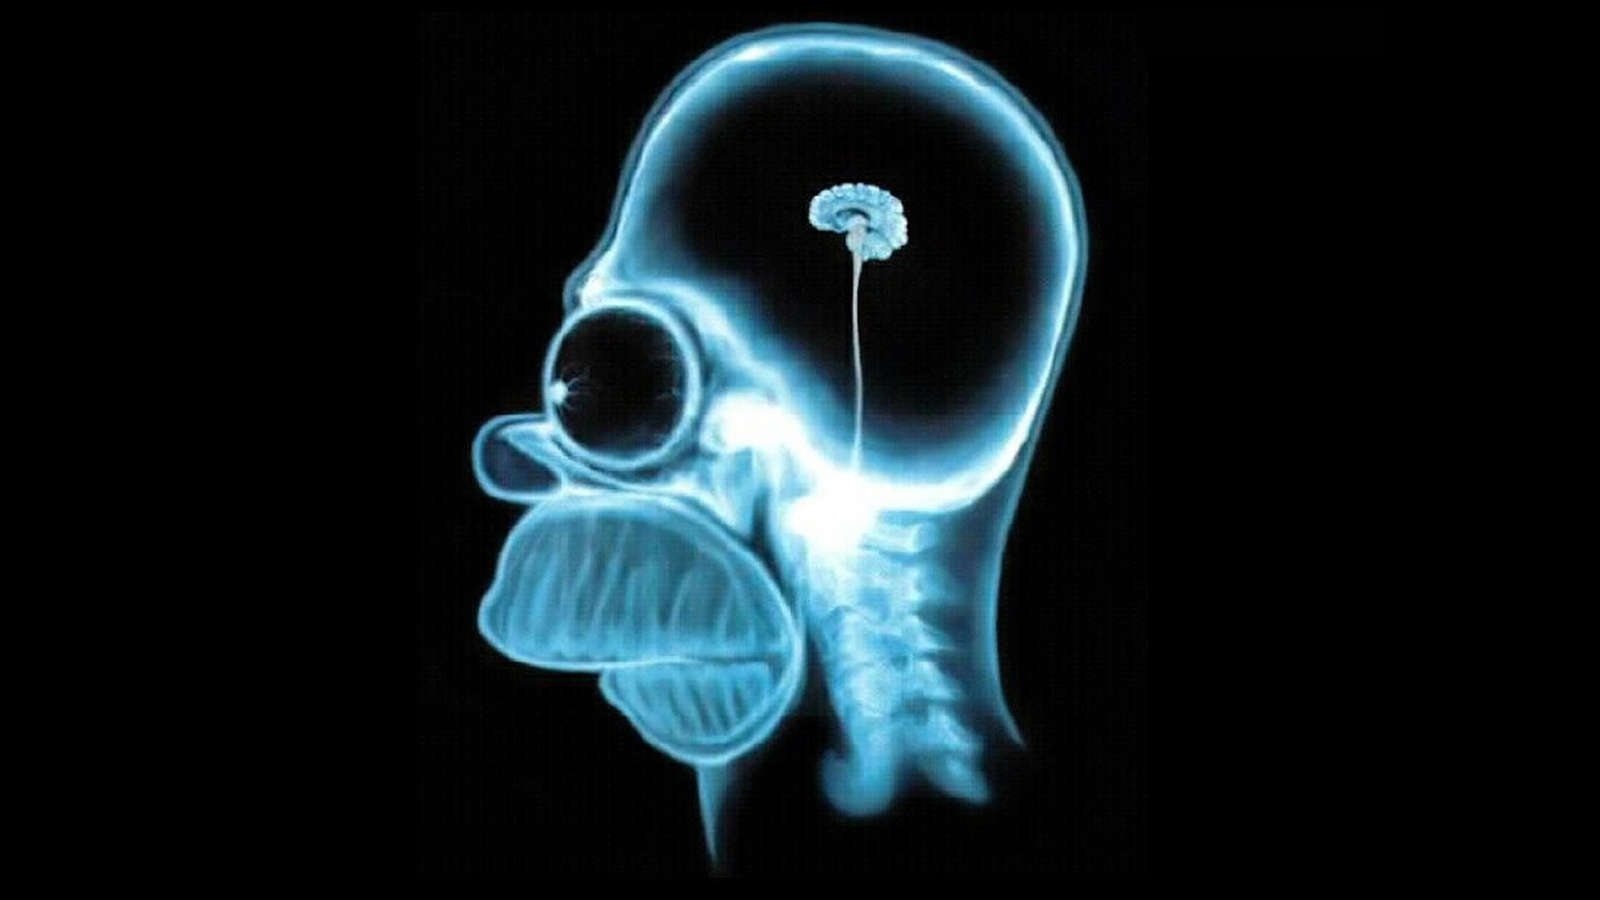 голова Гомера Симпсона, череп рентген, текстура, фон, скачать фото, head Homer Simpson skull x-ray texture background